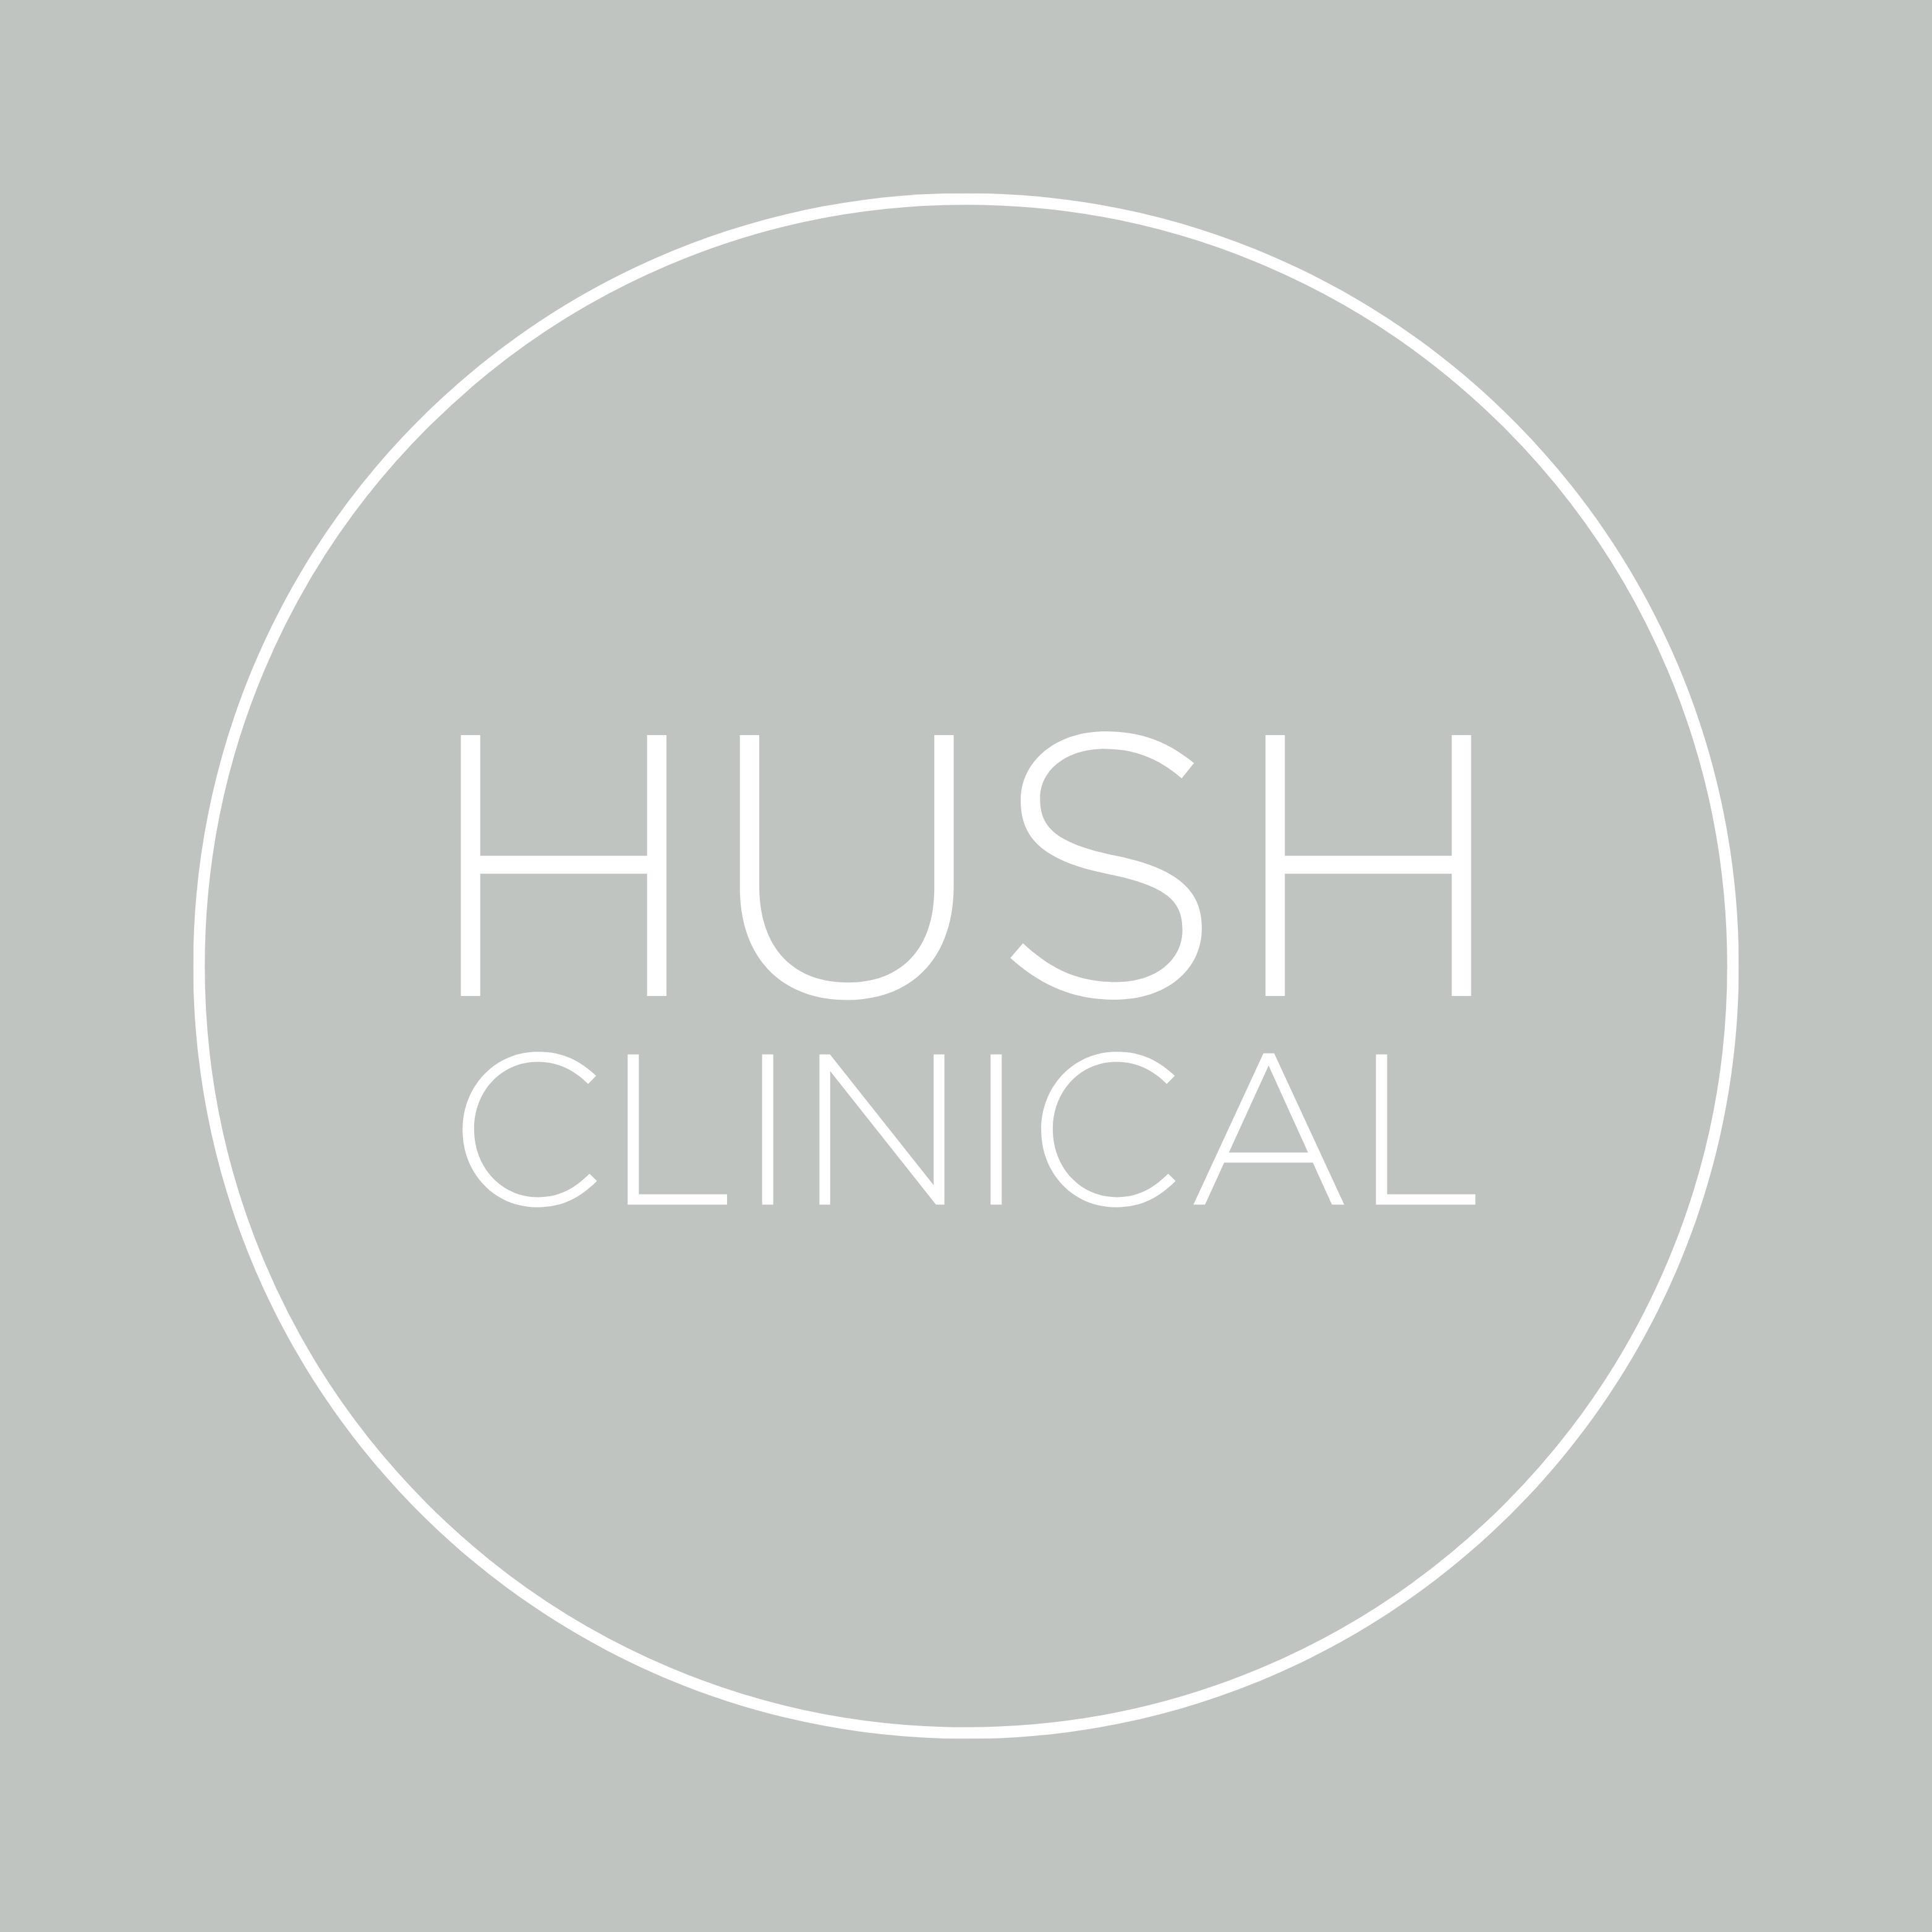 Hush Clinical